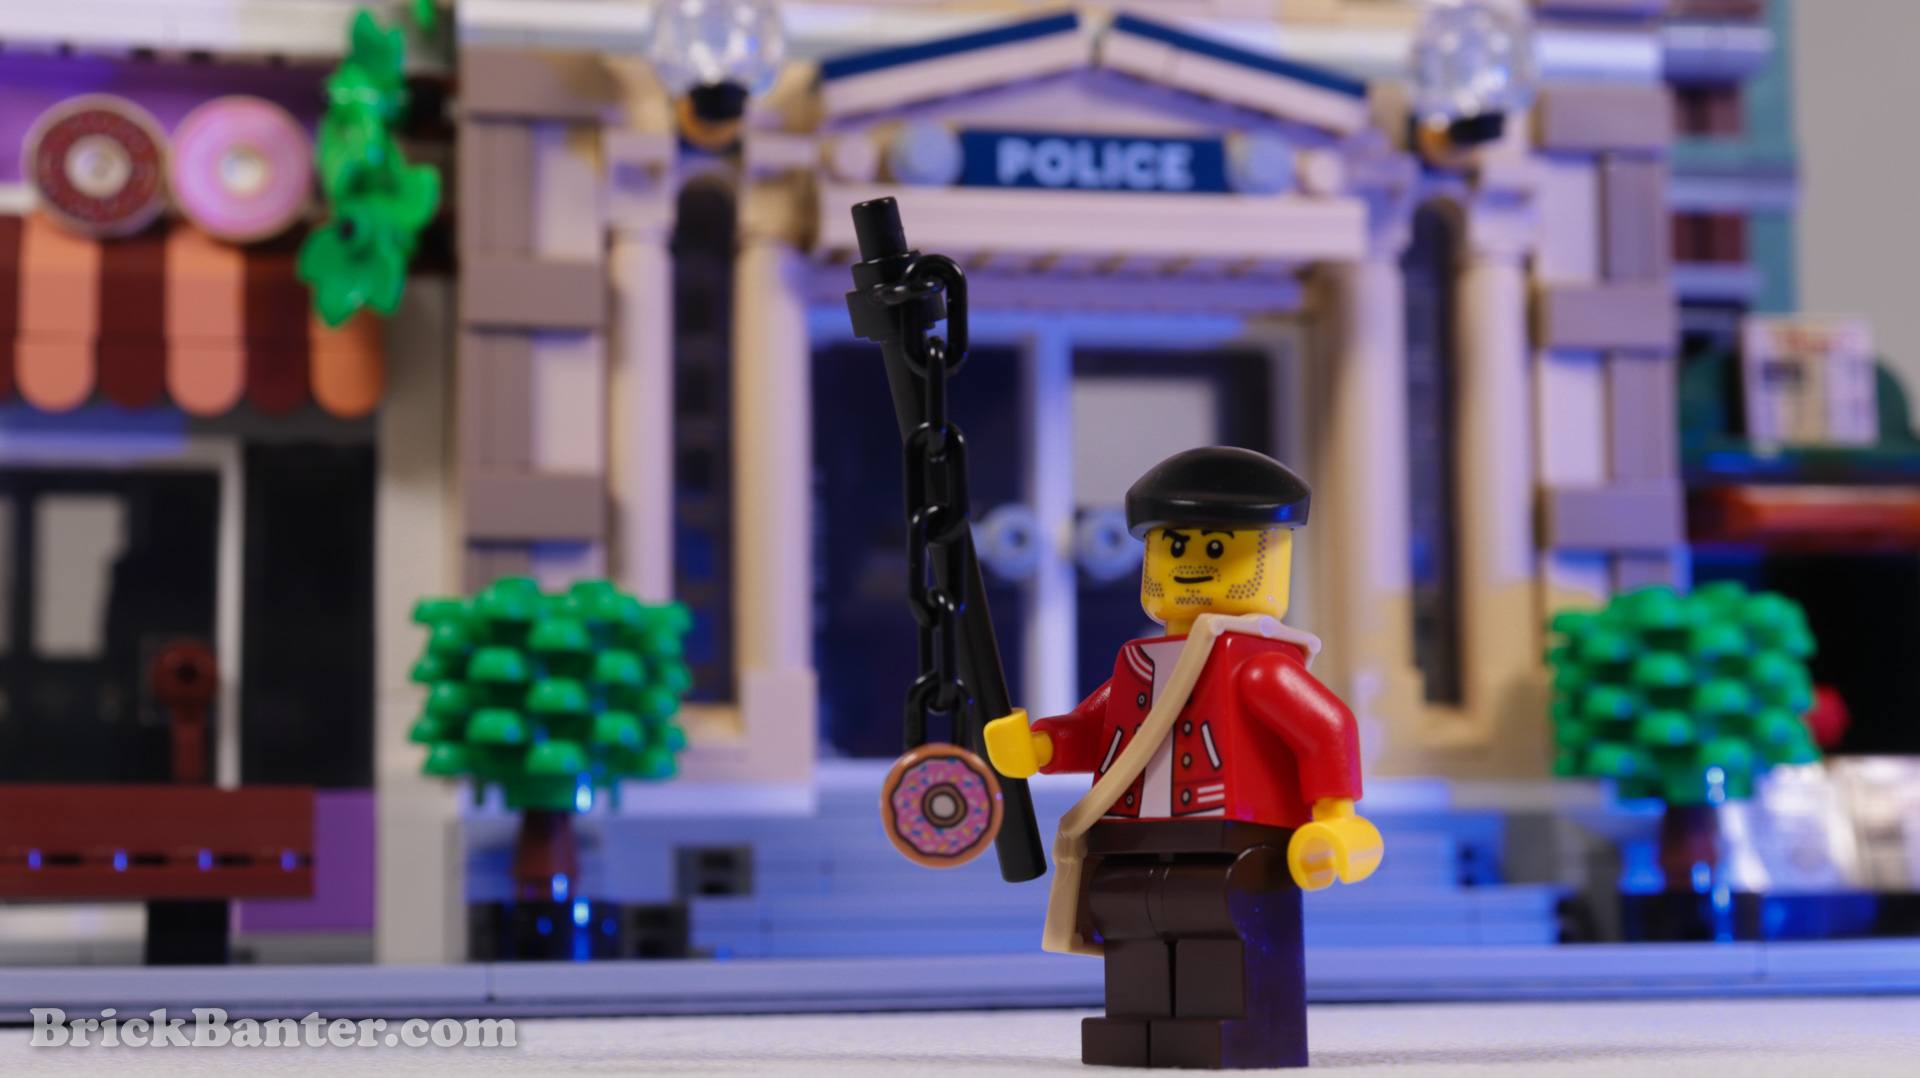 LEGO 10278 – Police Station - Chris McVeigh